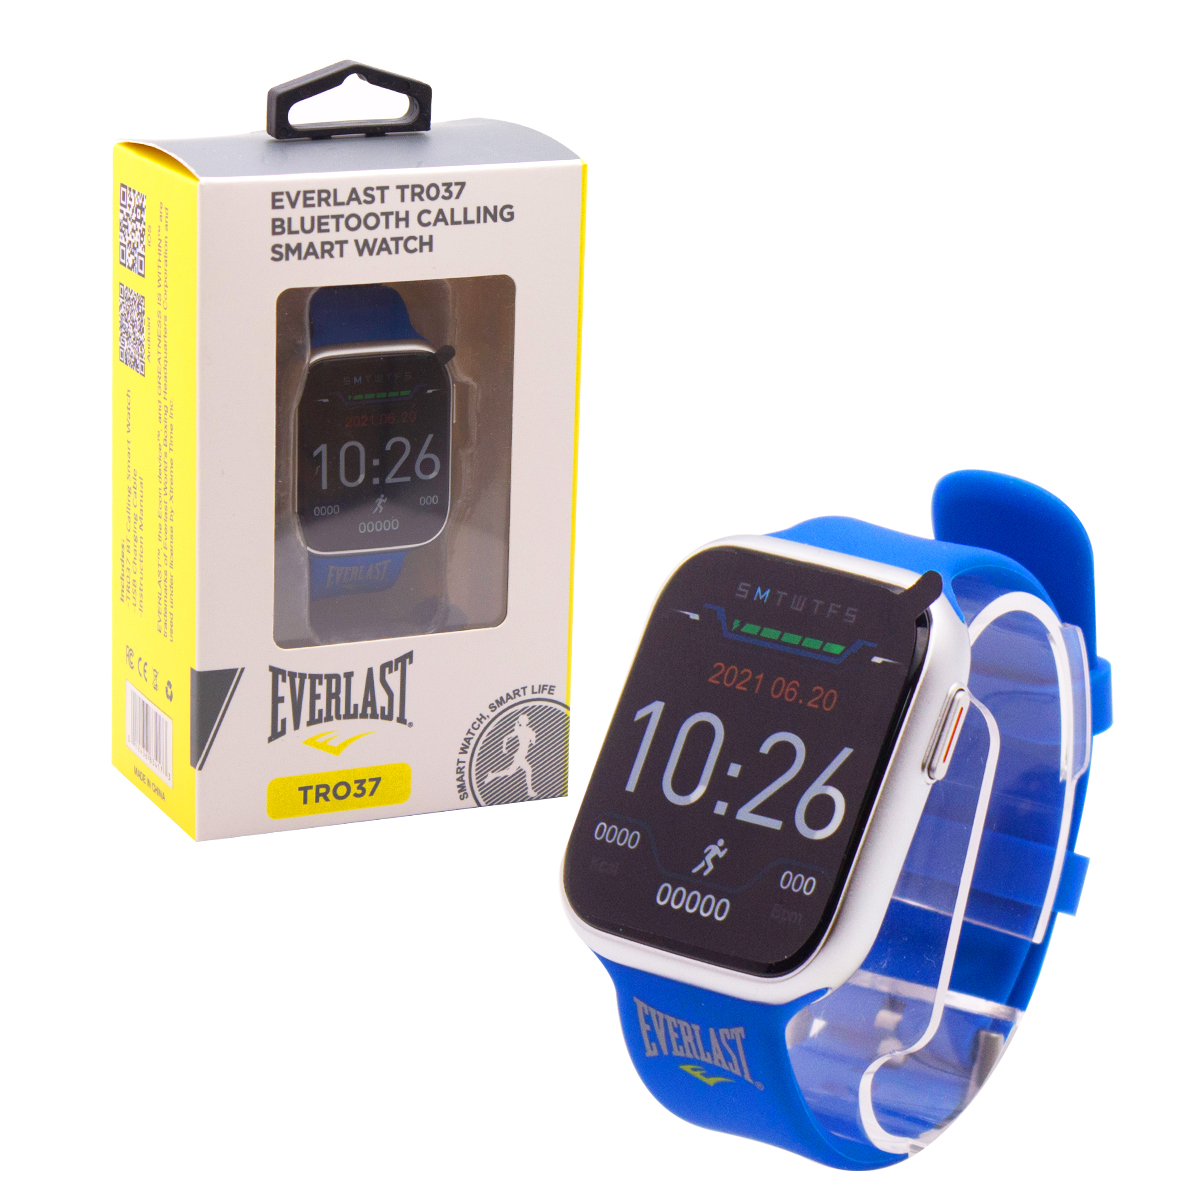 Photos - Other for Mobile Everlast ® TR037 Bluetooth Calling Smartwatch - Blue EVWTR037BL 